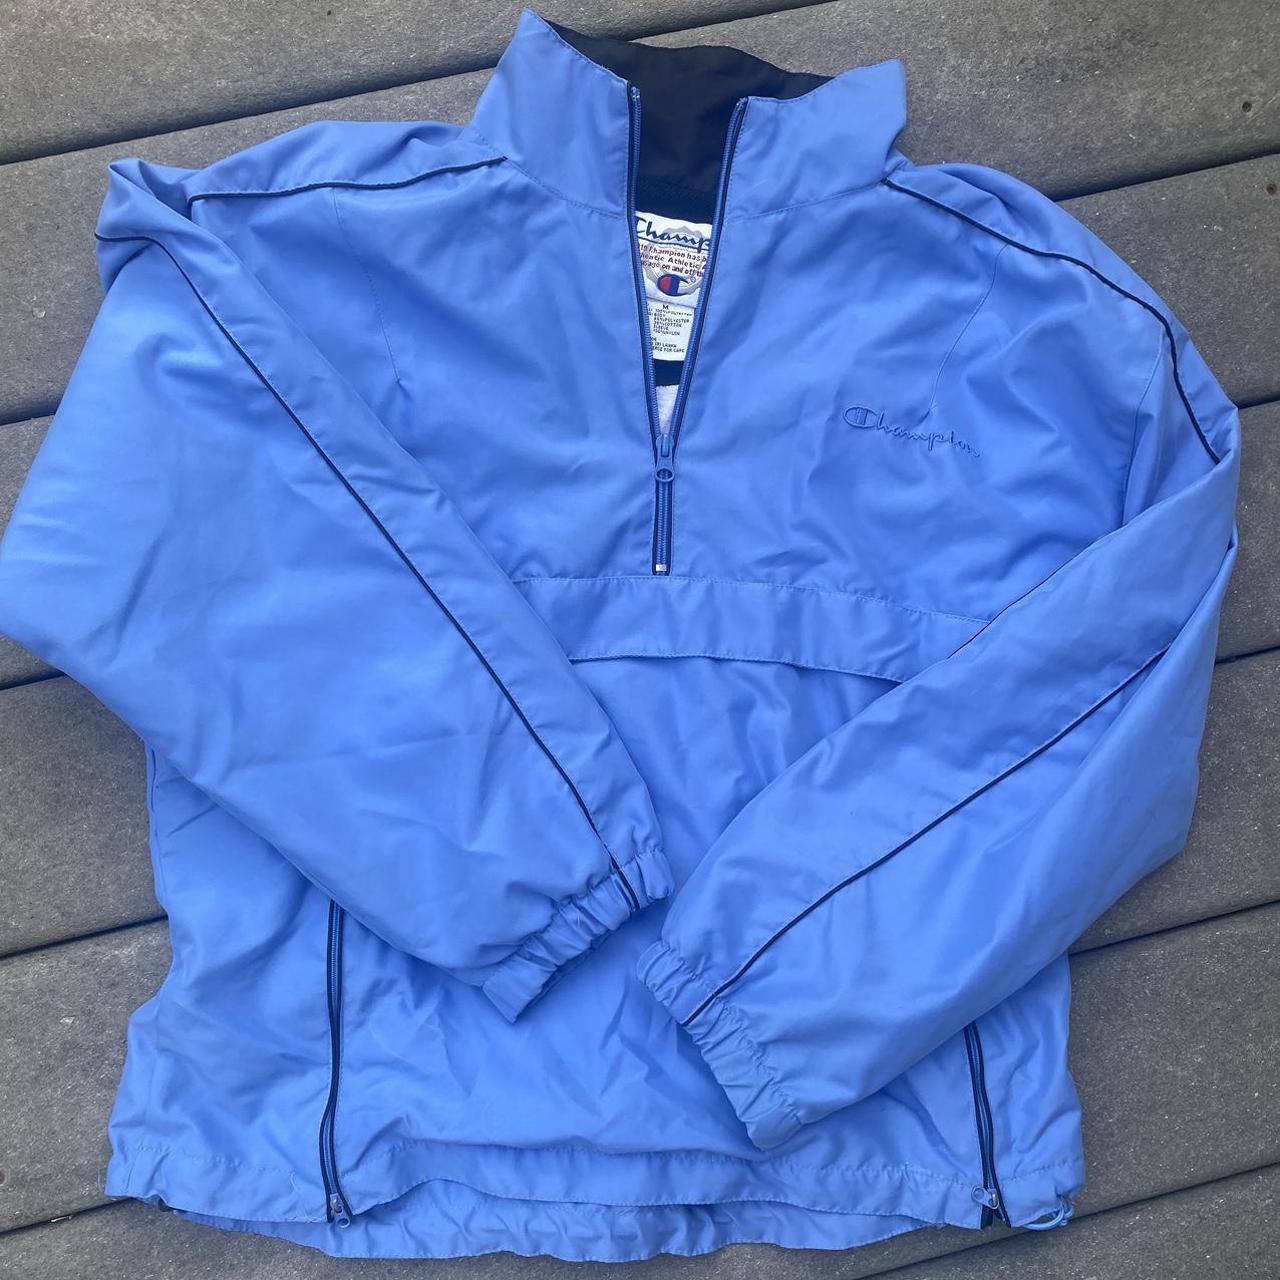 Blue champion light jacket. Size medium (bit of a... - Depop